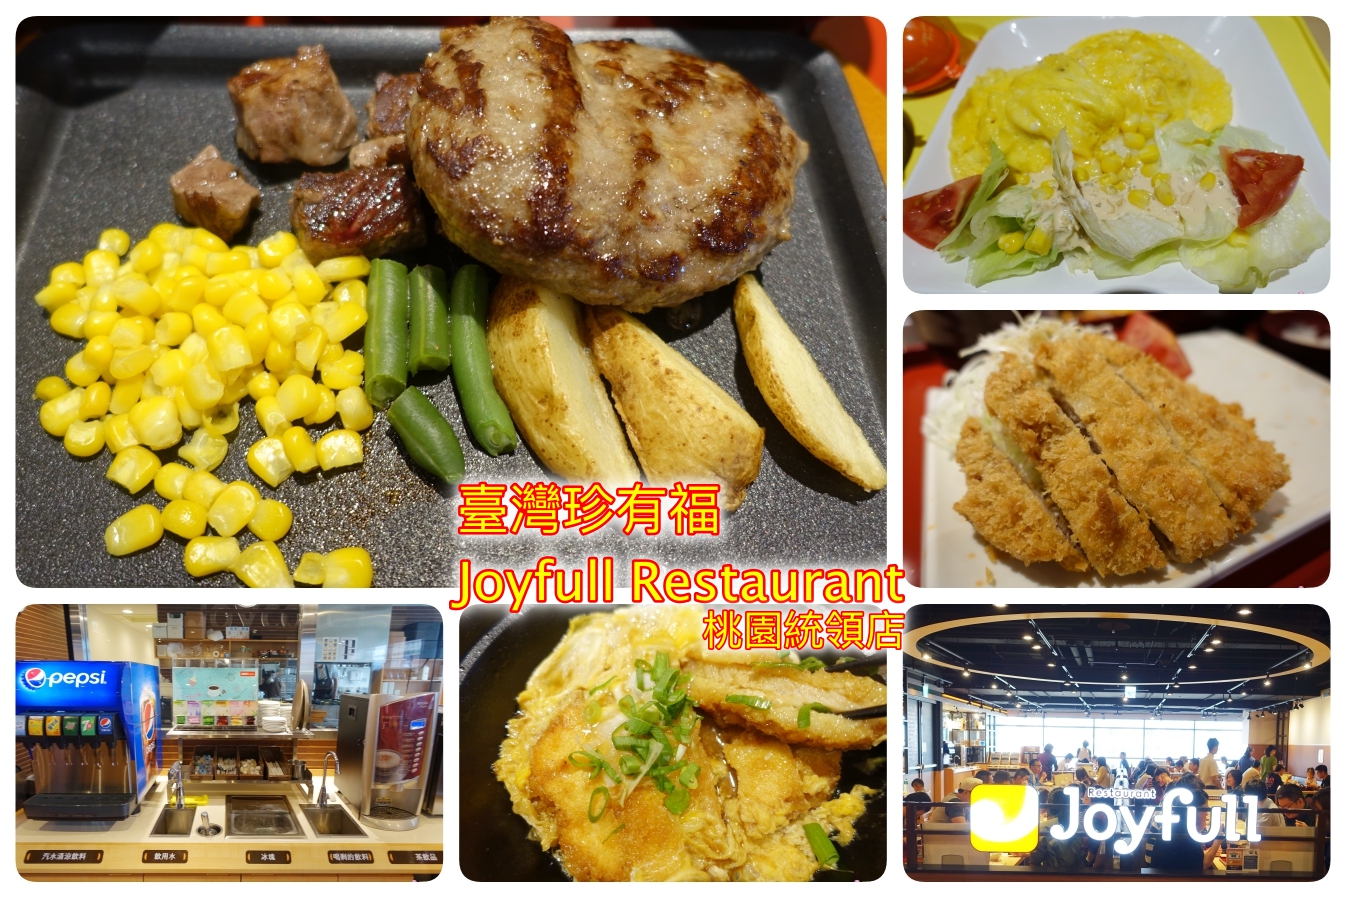 20181111臺灣珍有福Joyfull Restaurant